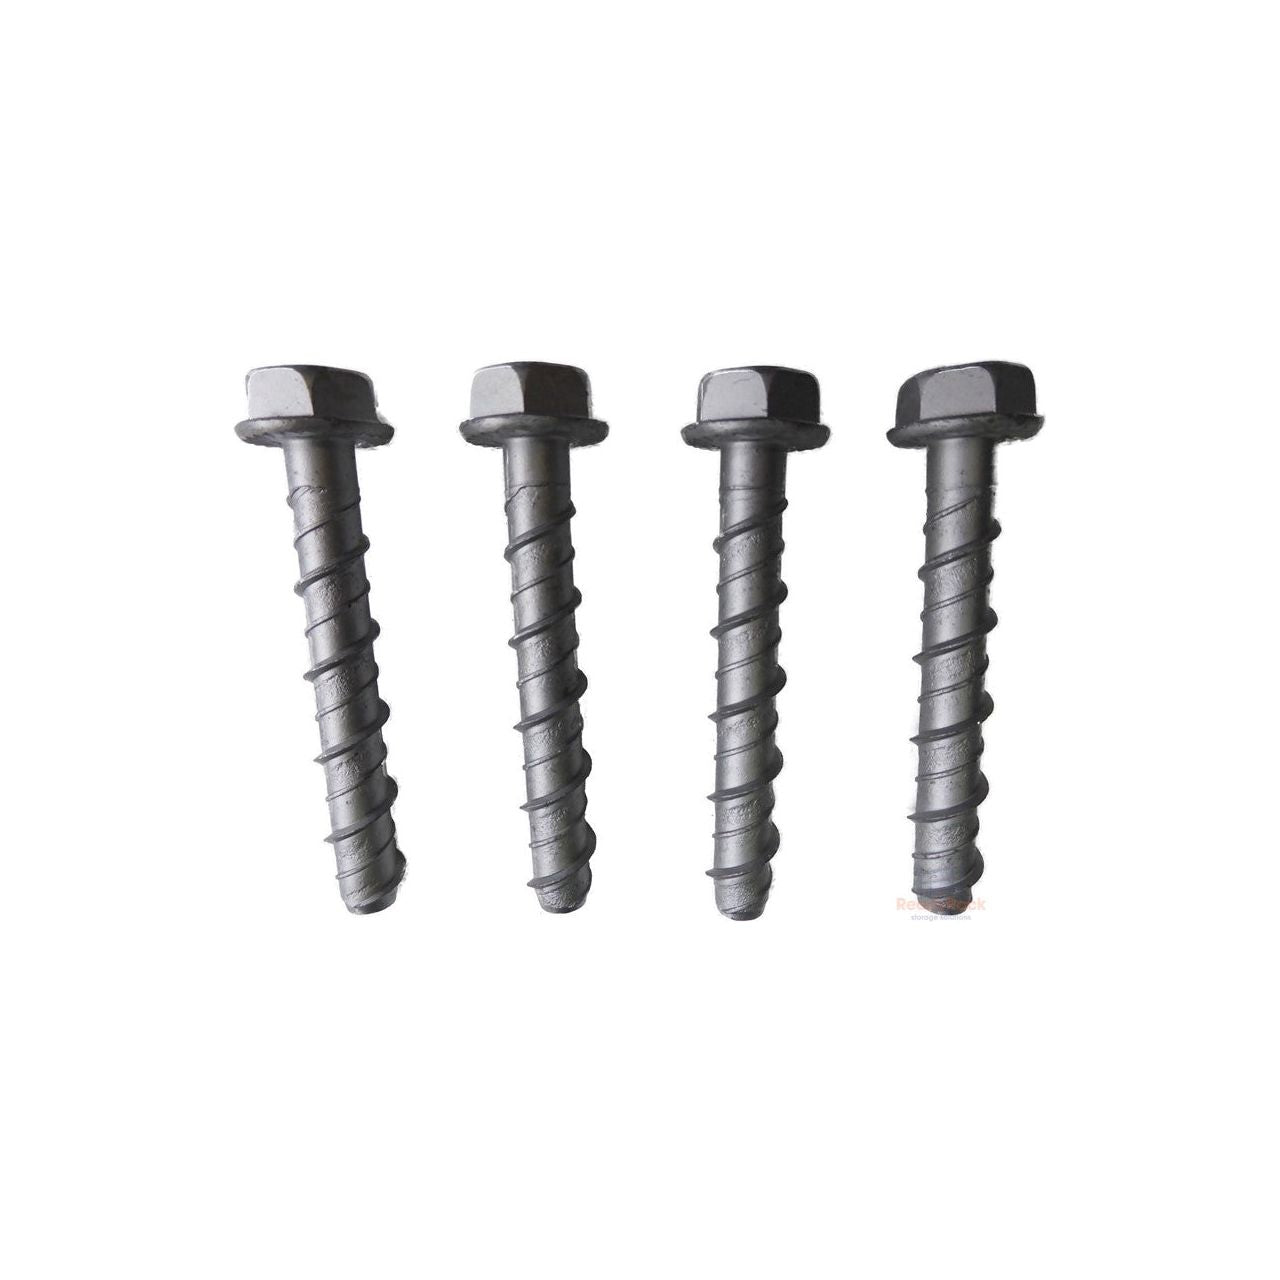 ReadyRack Column Guard 400mm screw bolts